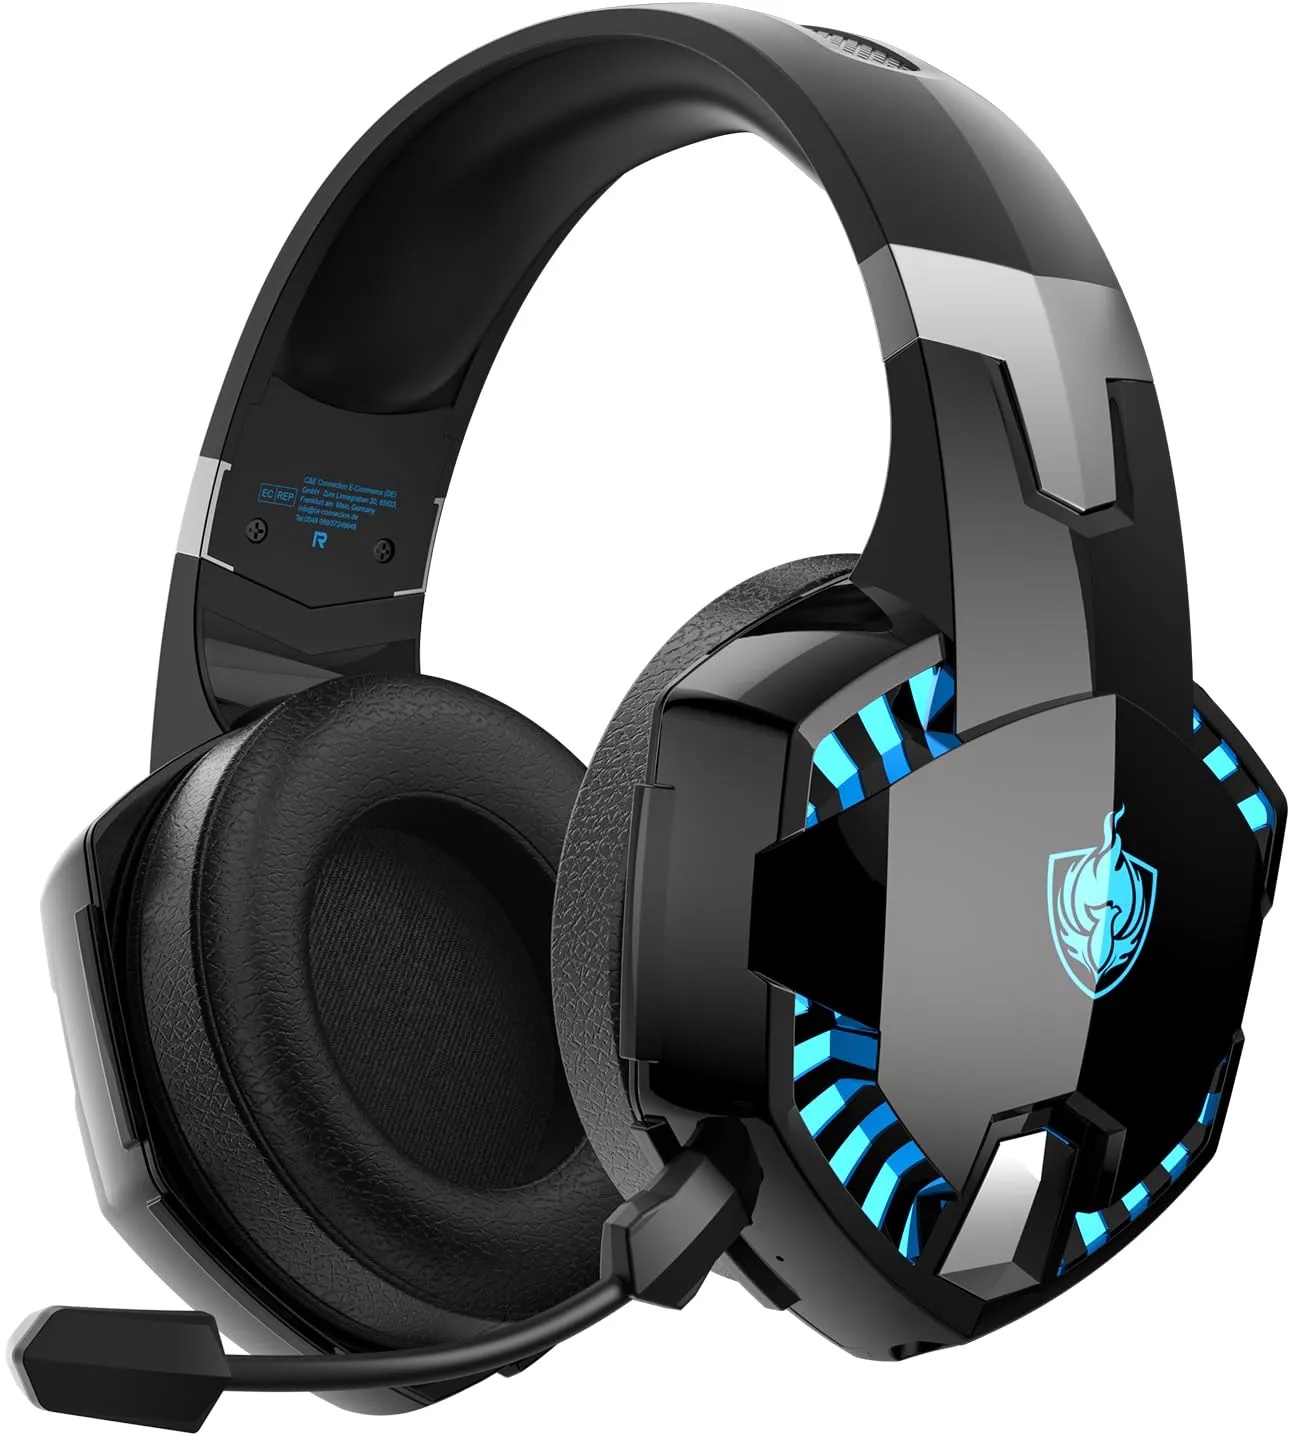 YOTMS PS4-Gaming-Headset für PS5, PC, Switch, G2000 Pro, kabellose Bluetooth-Over-Ear-Kopfhörer für Telefon, Laptop, mit abnehmbarem Mikrofon mit Geräuschunterdrückung, Stereo-Sound (blau)